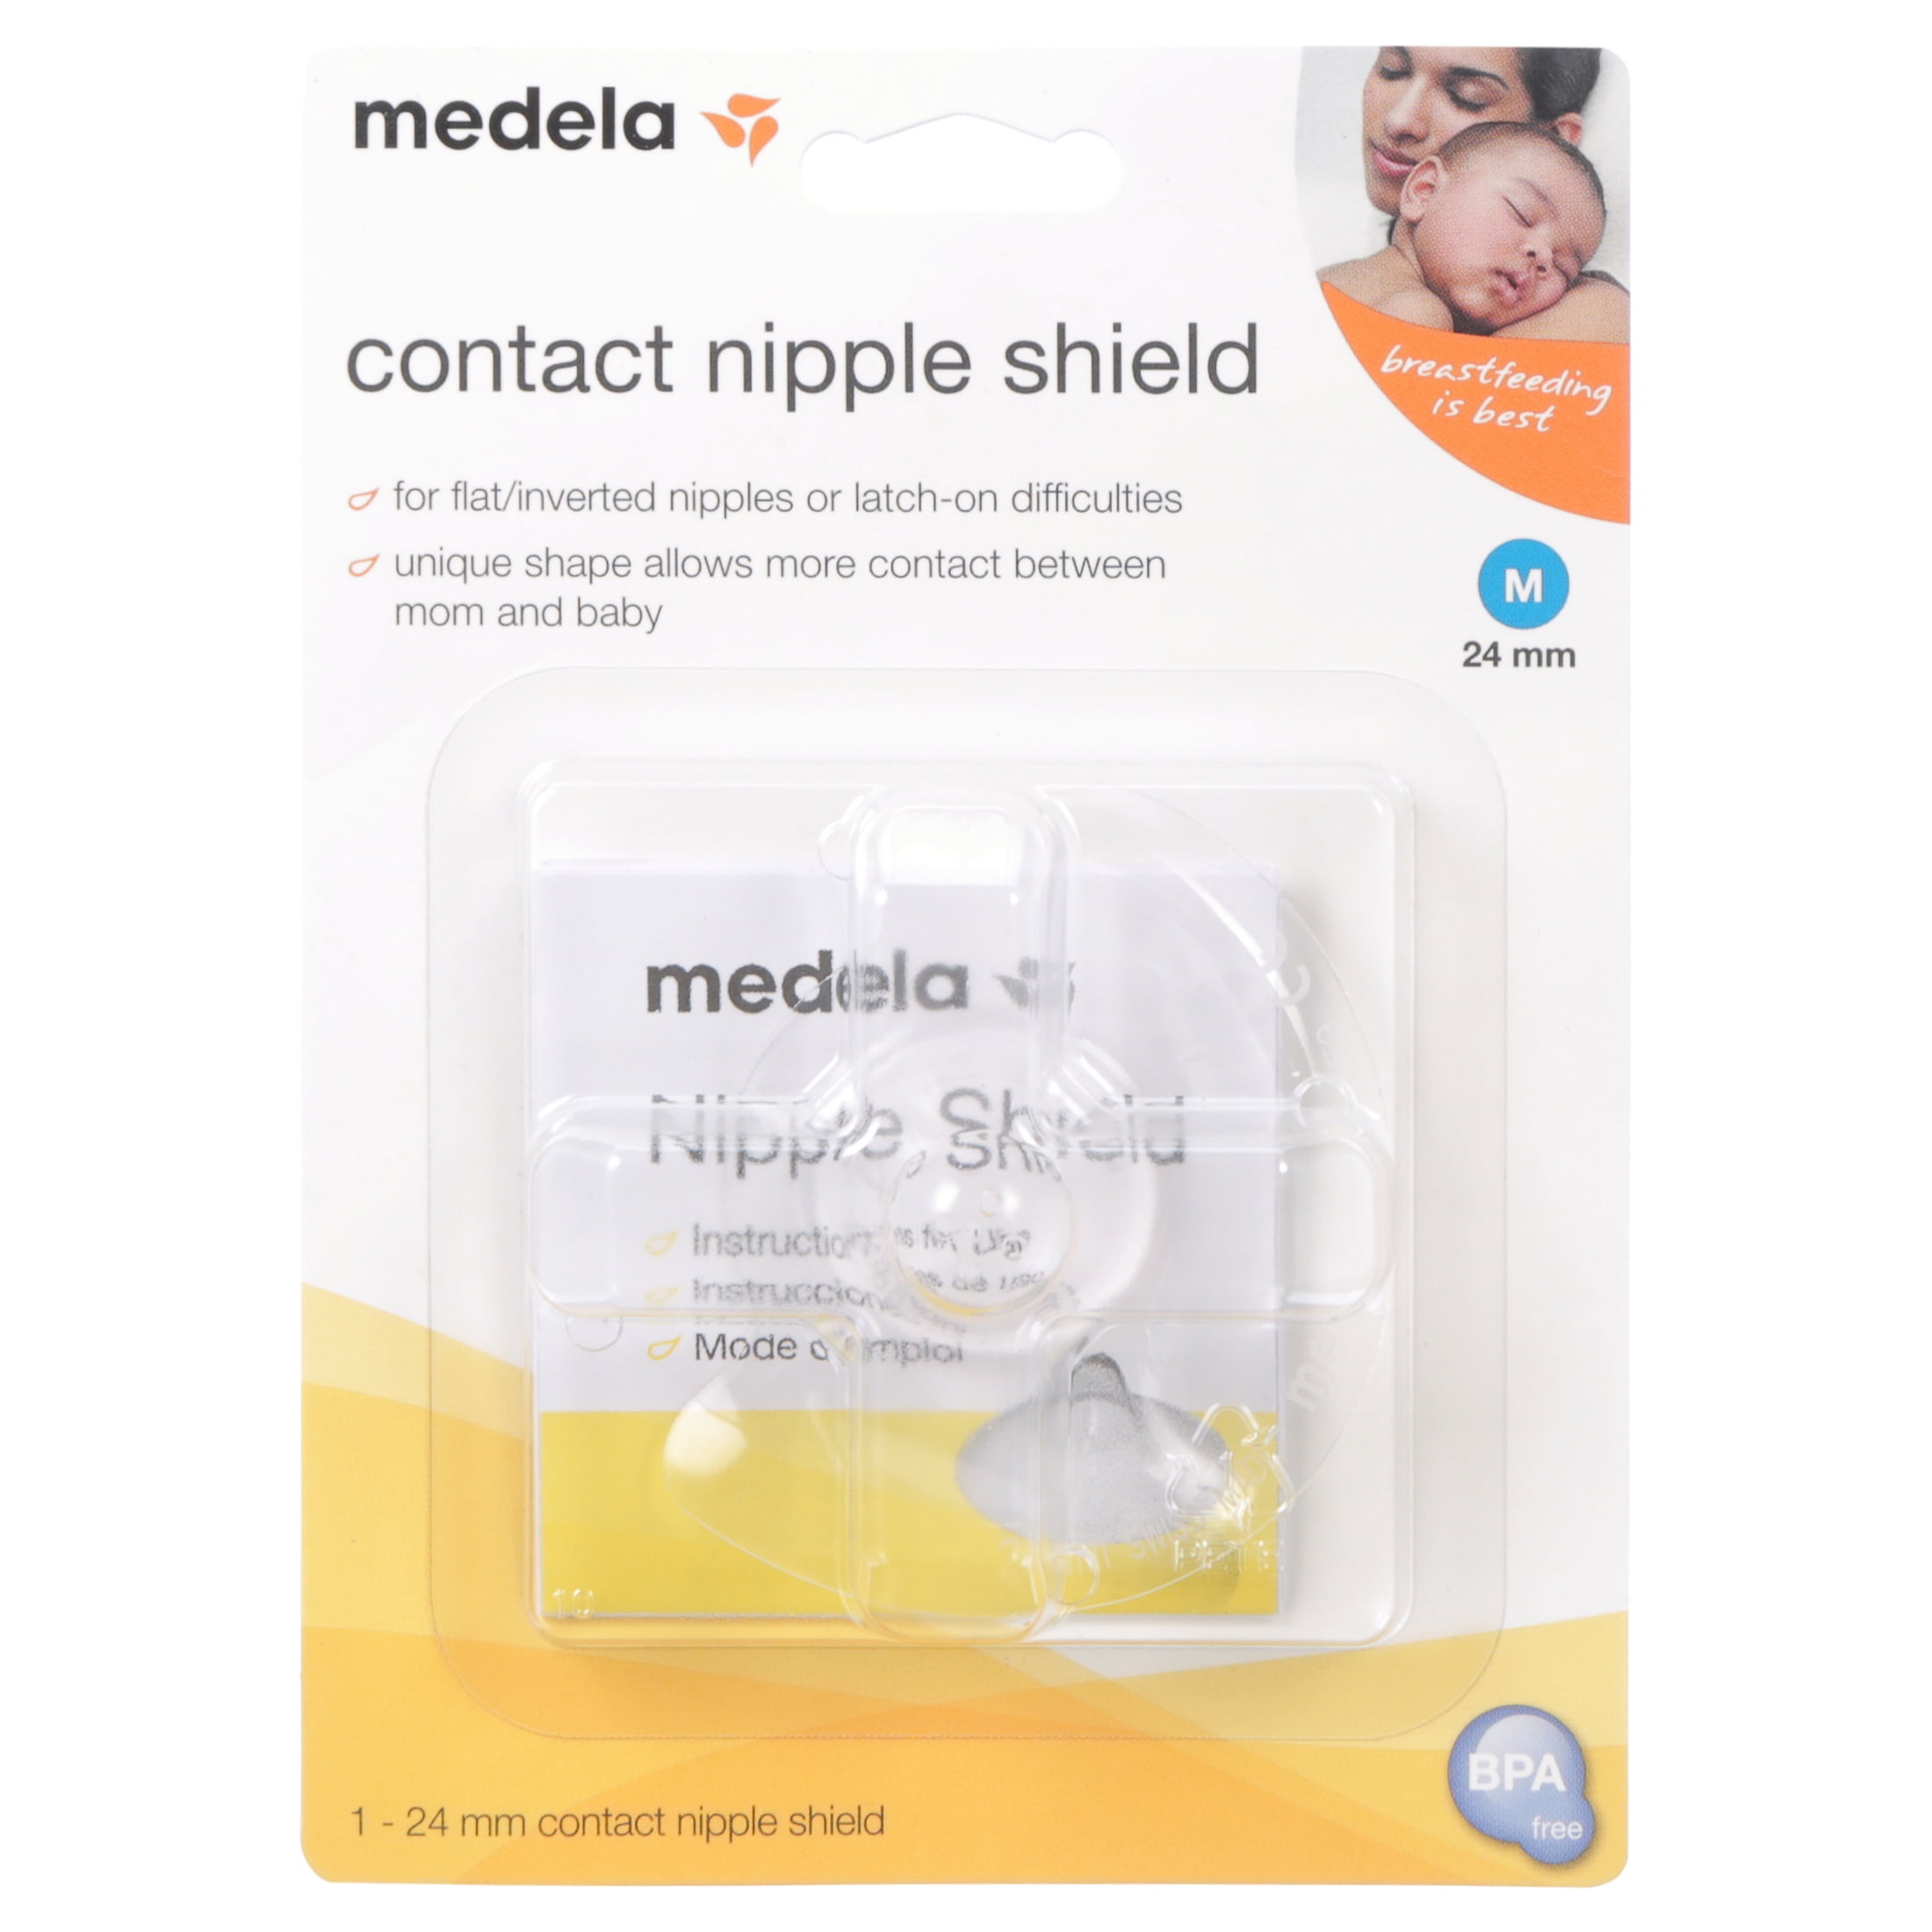 Medela Contact Nipple Shields, 24mm, Silicone, DEHP & BPA Free, Clear,  67203NA, 1 Each